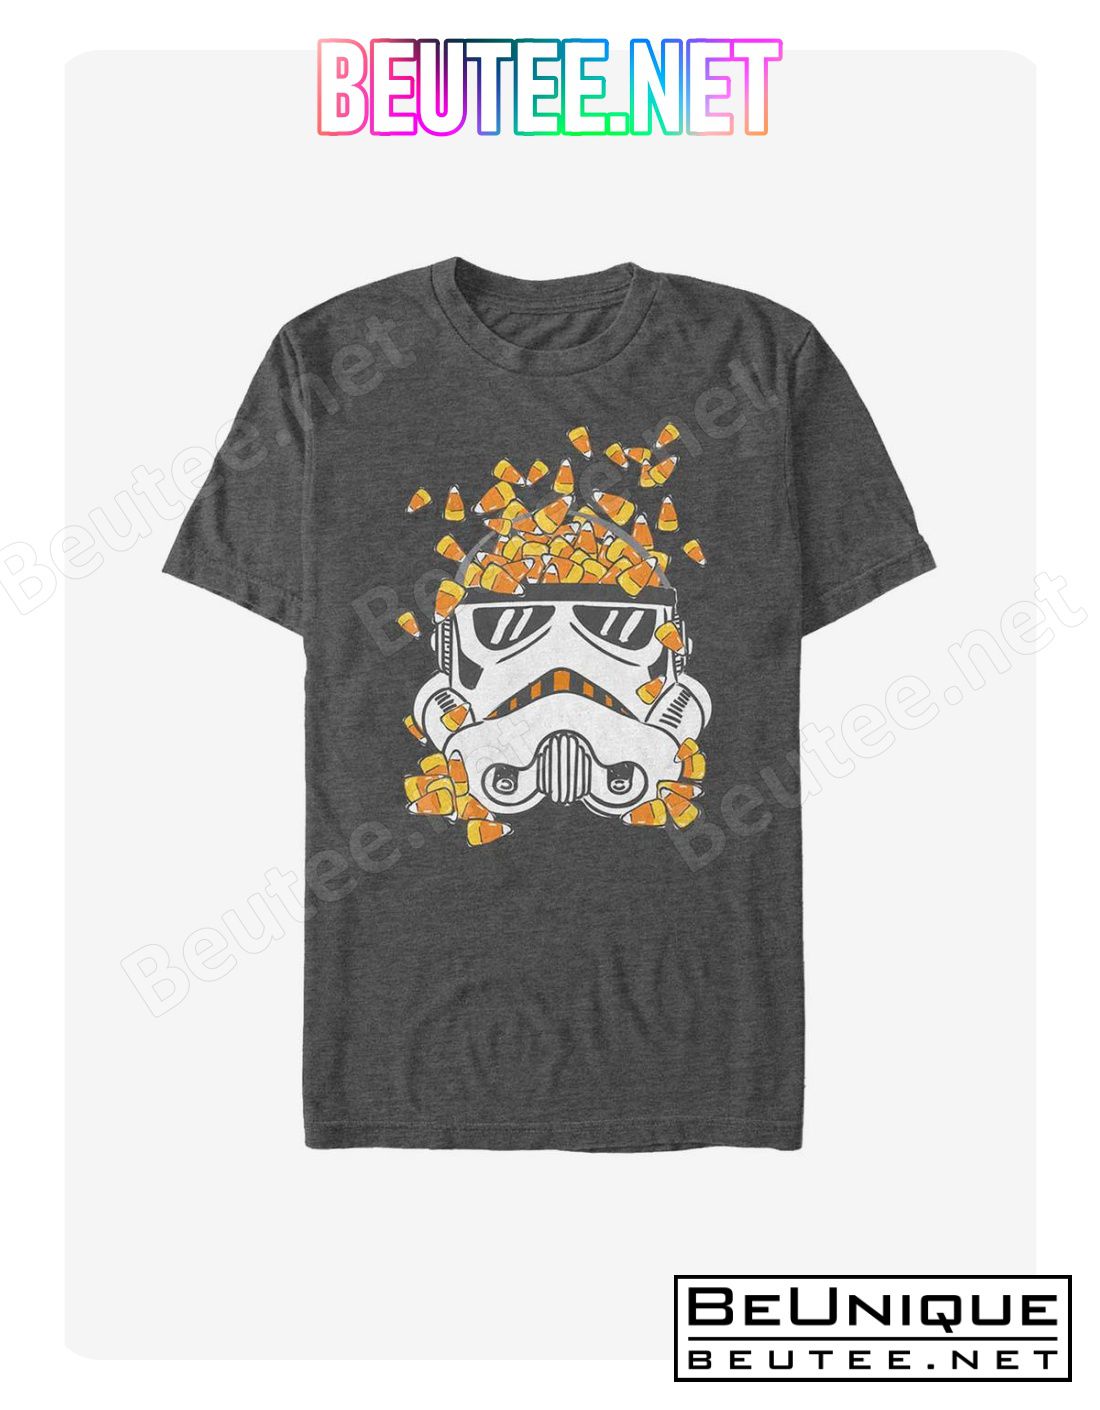 Star Wars Candy Corn Trooper T-Shirt